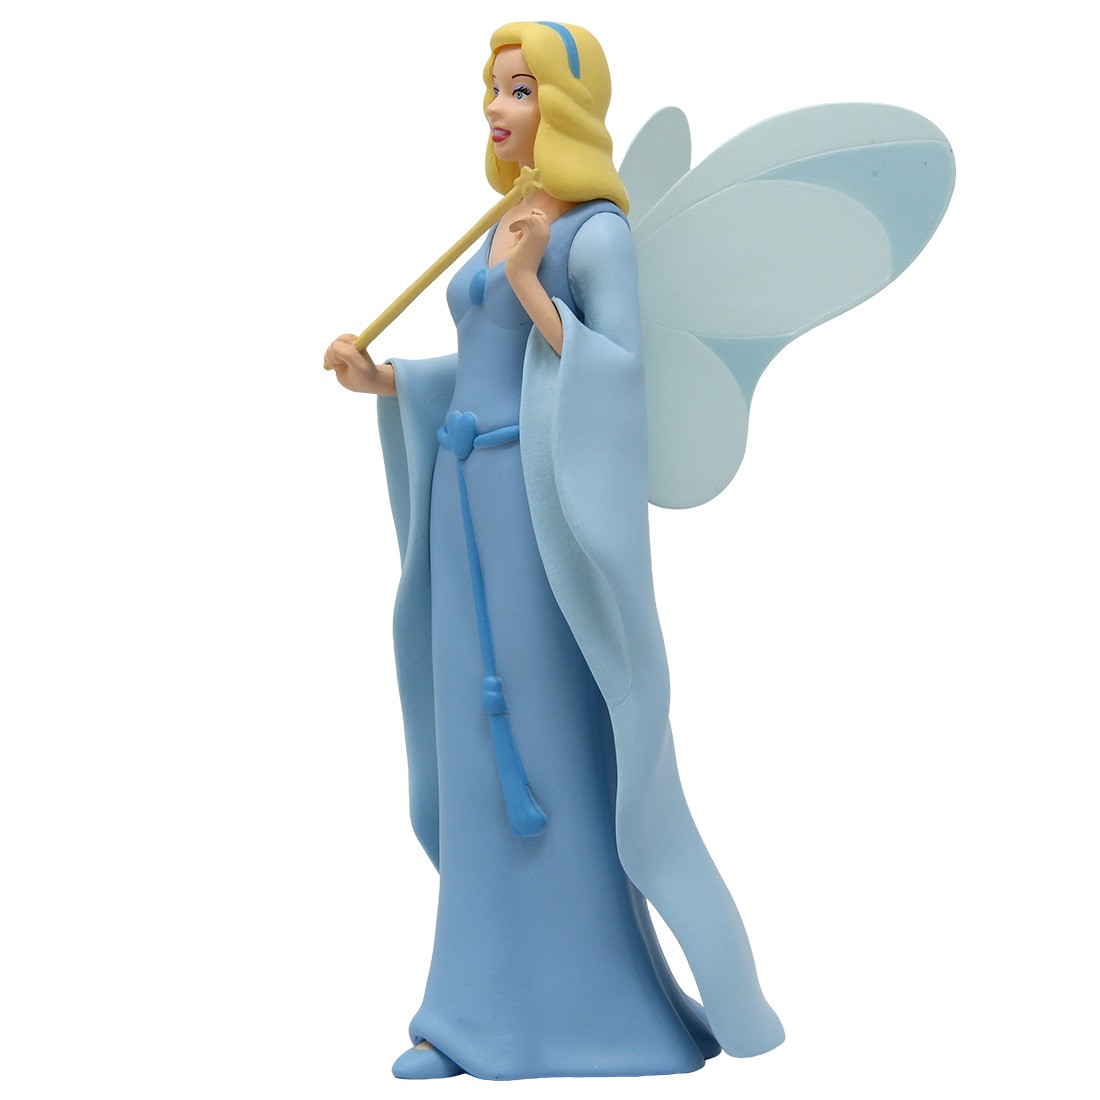 Medicom Udf Disney Series Pinocchio Blue Fairy Ultra Detail Figure Bluecolored